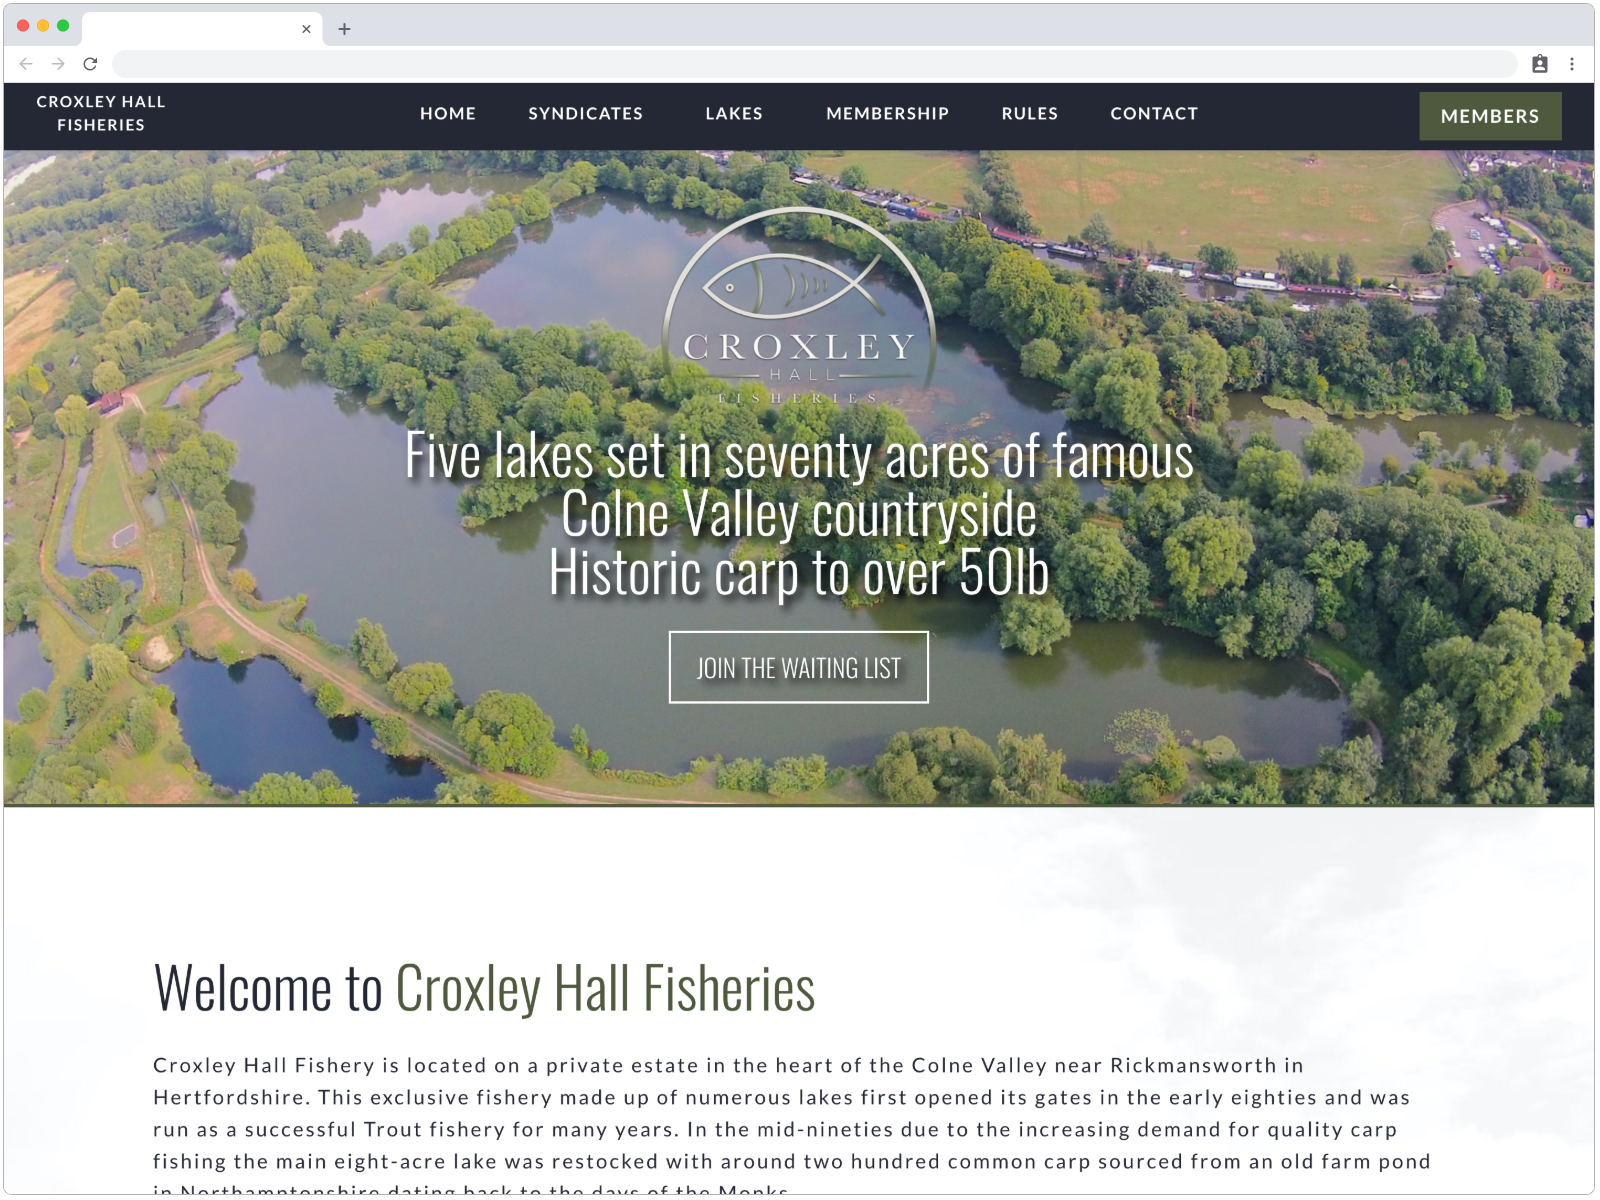 Croxley Hall Fisheries portfolio